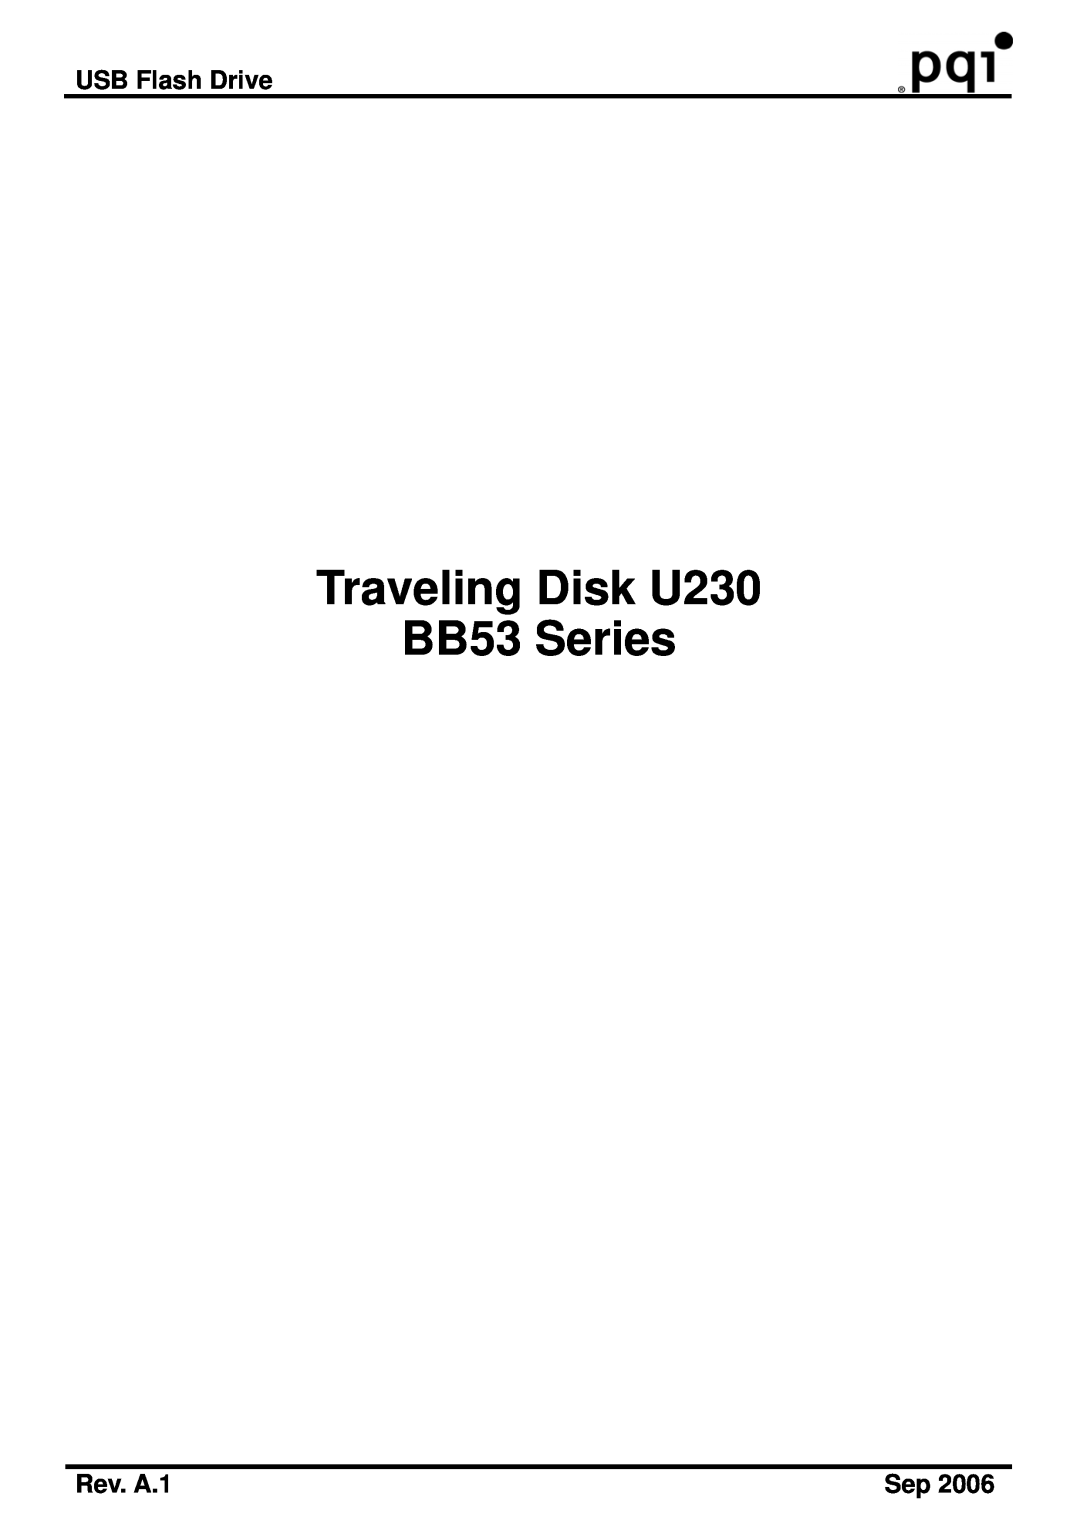 PQI manual USB Flash Drive, Rev. A.1, Traveling Disk U230 BB53 Series 